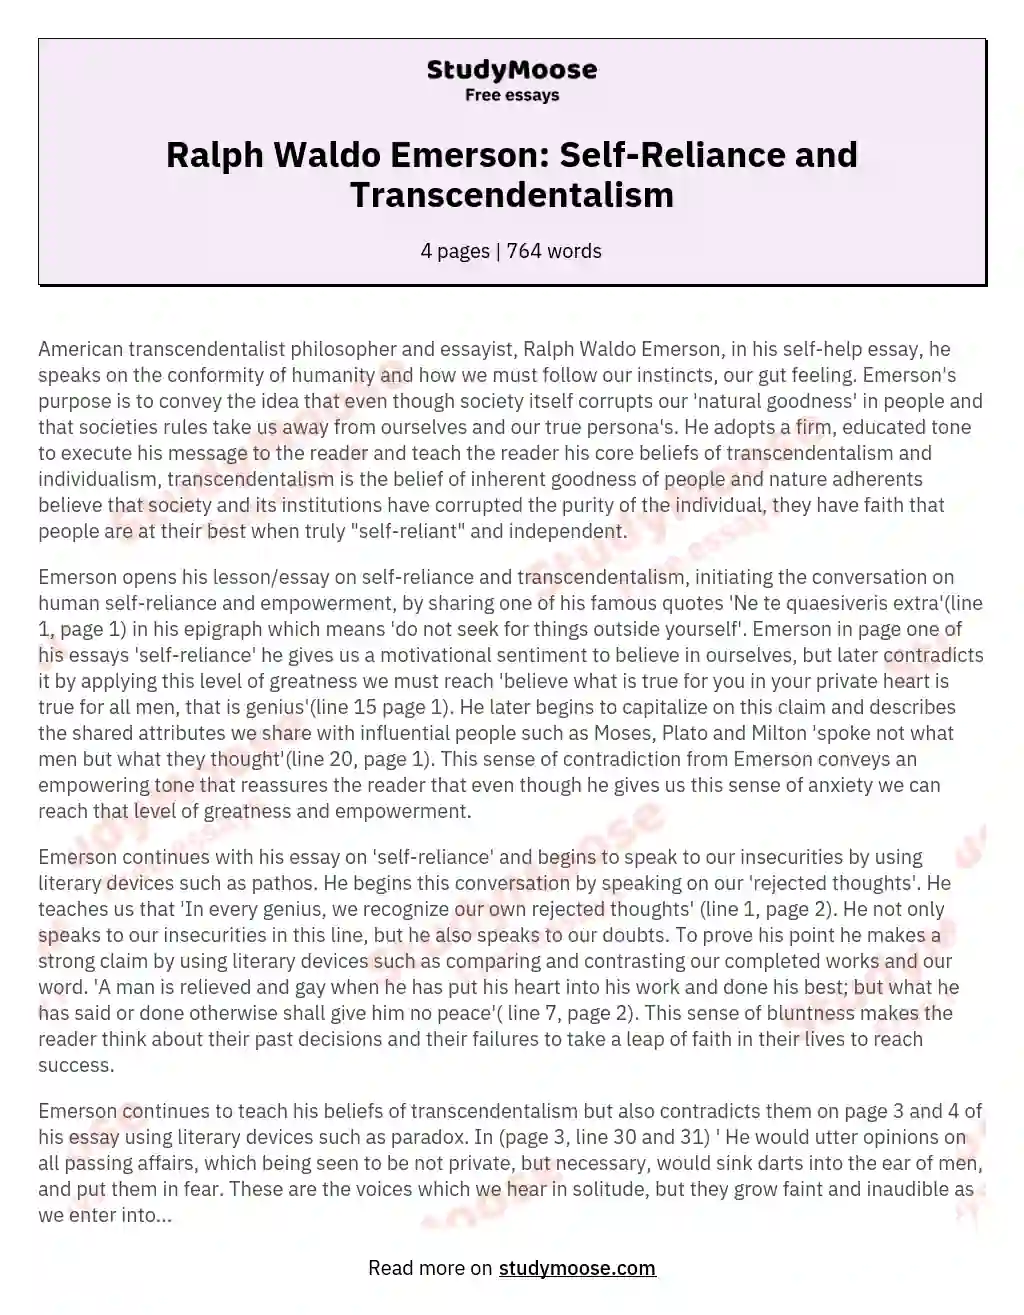 Ralph Waldo Emerson: Self-Reliance and Transcendentalism